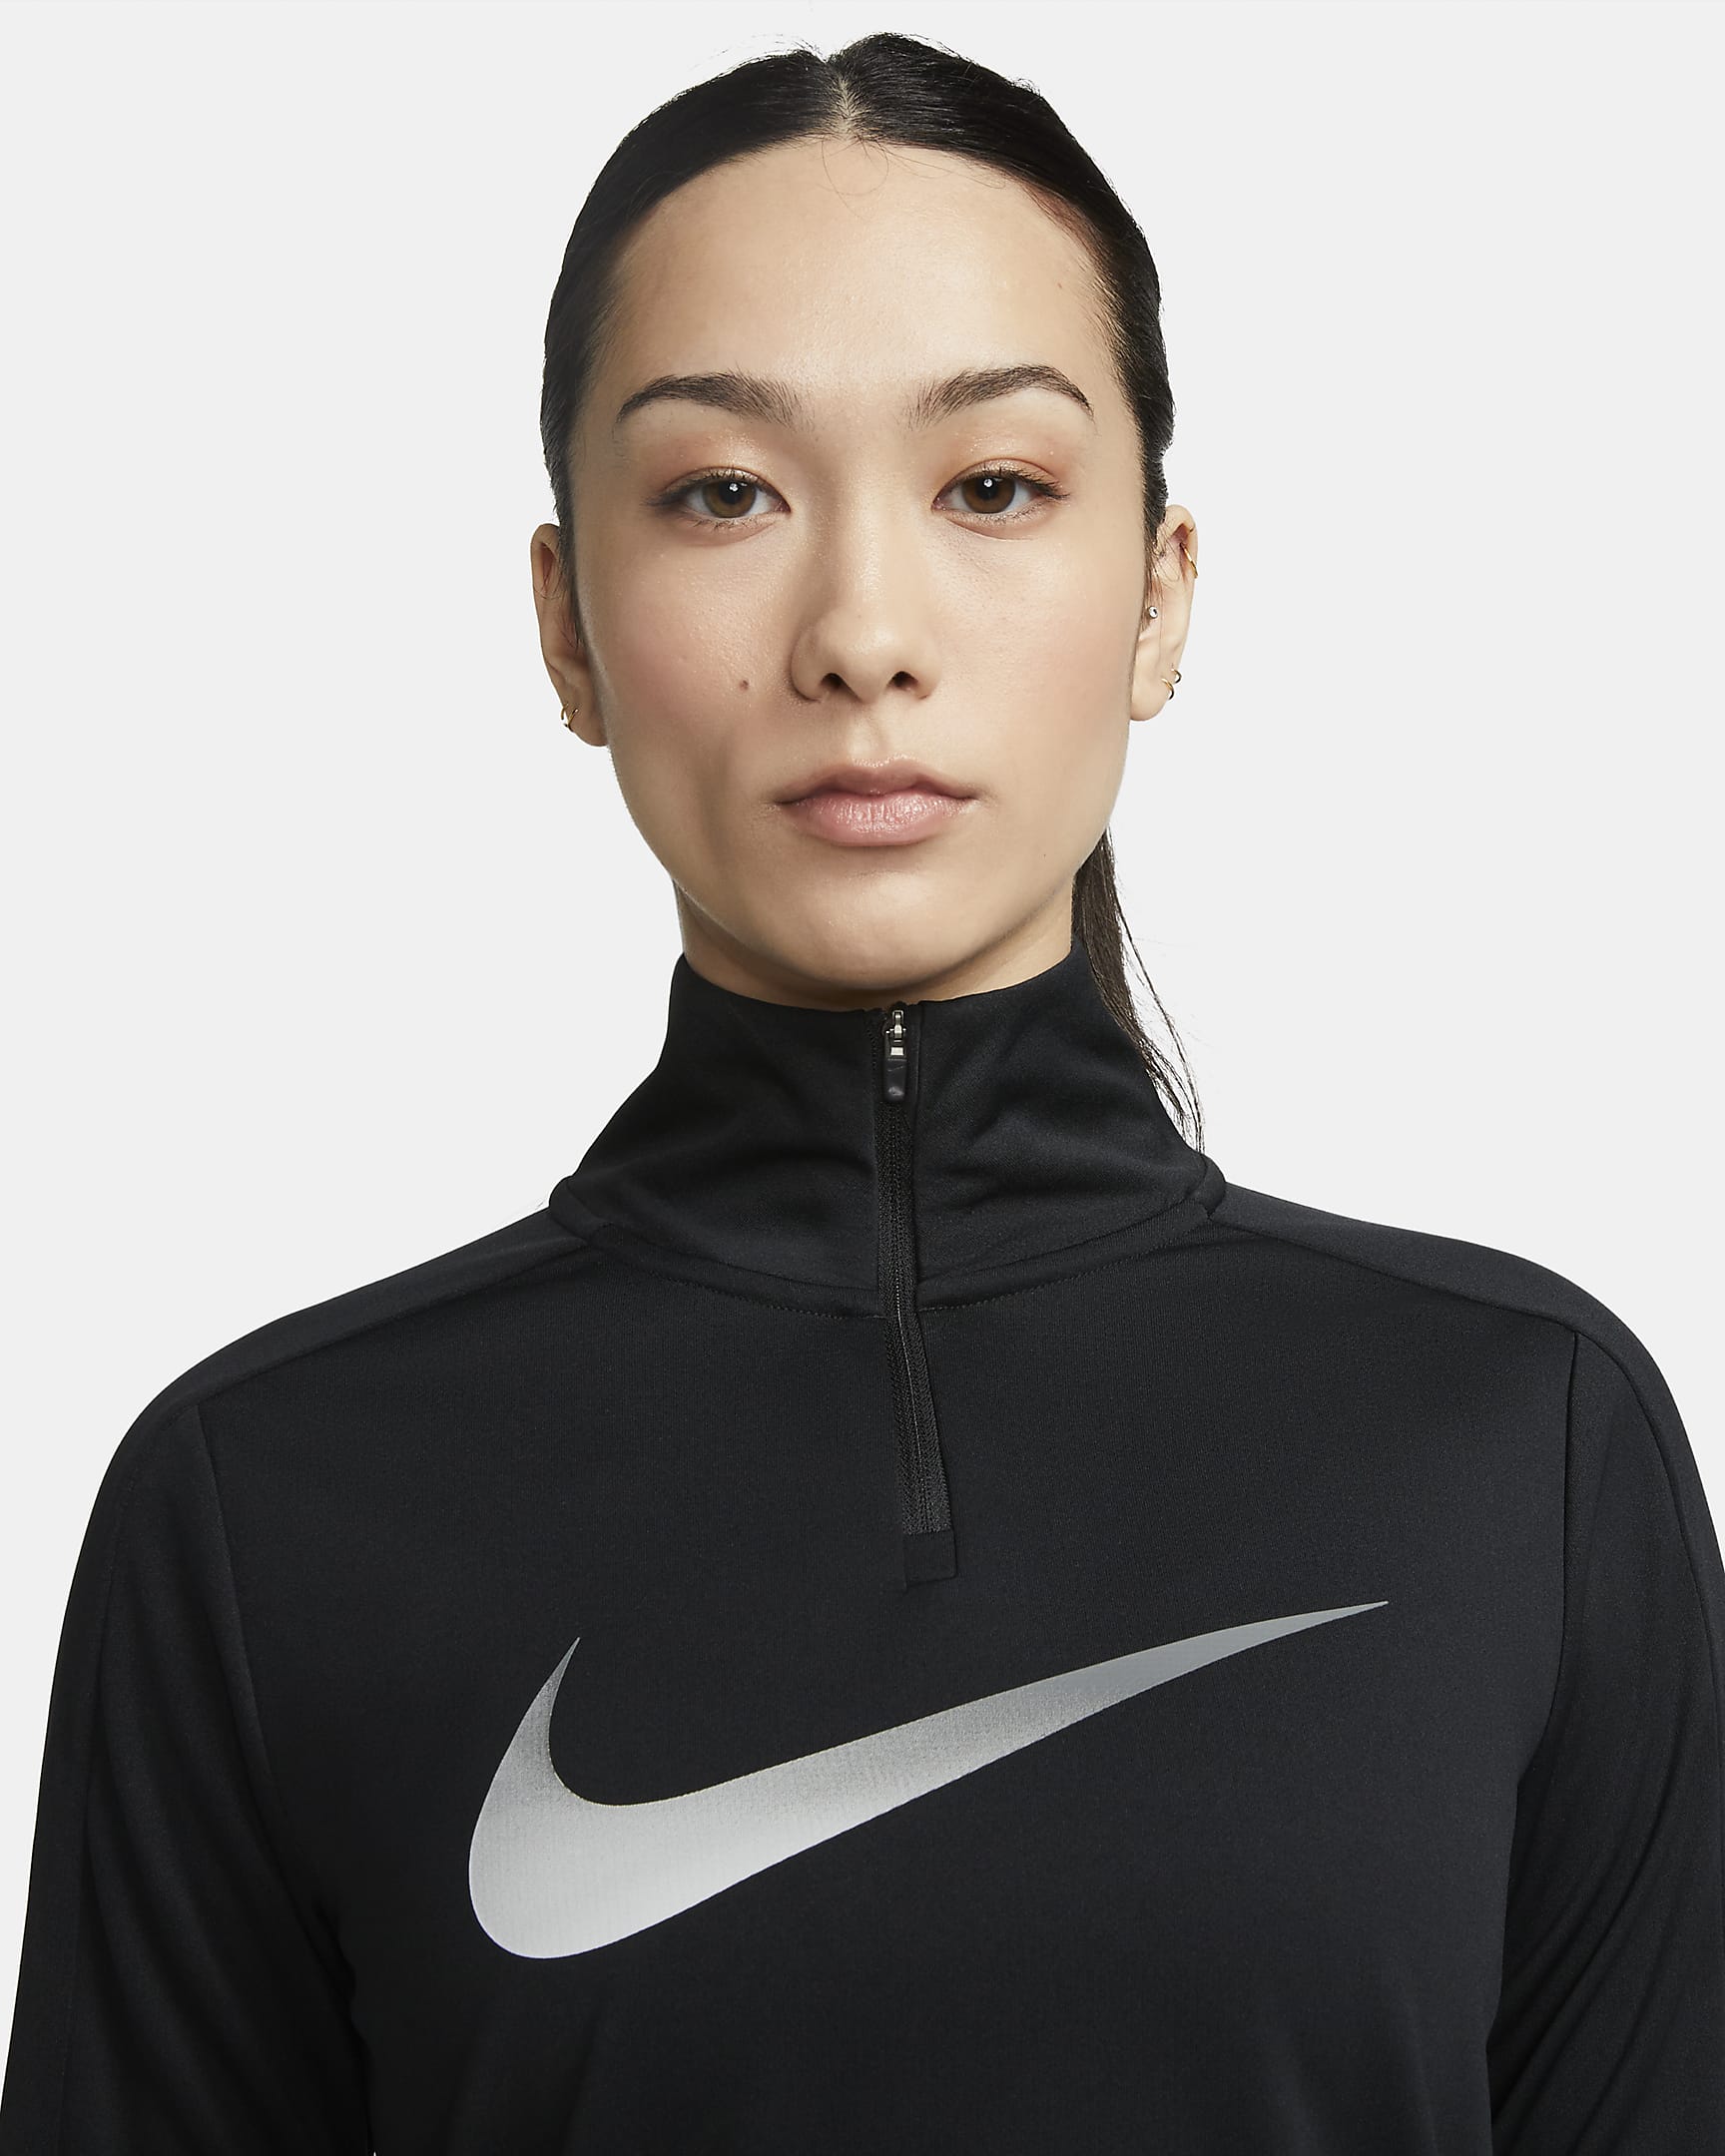 Nike Dri-FIT Swoosh Women's 1/4-Zip Long-Sleeve Running Mid Layer. Nike SG